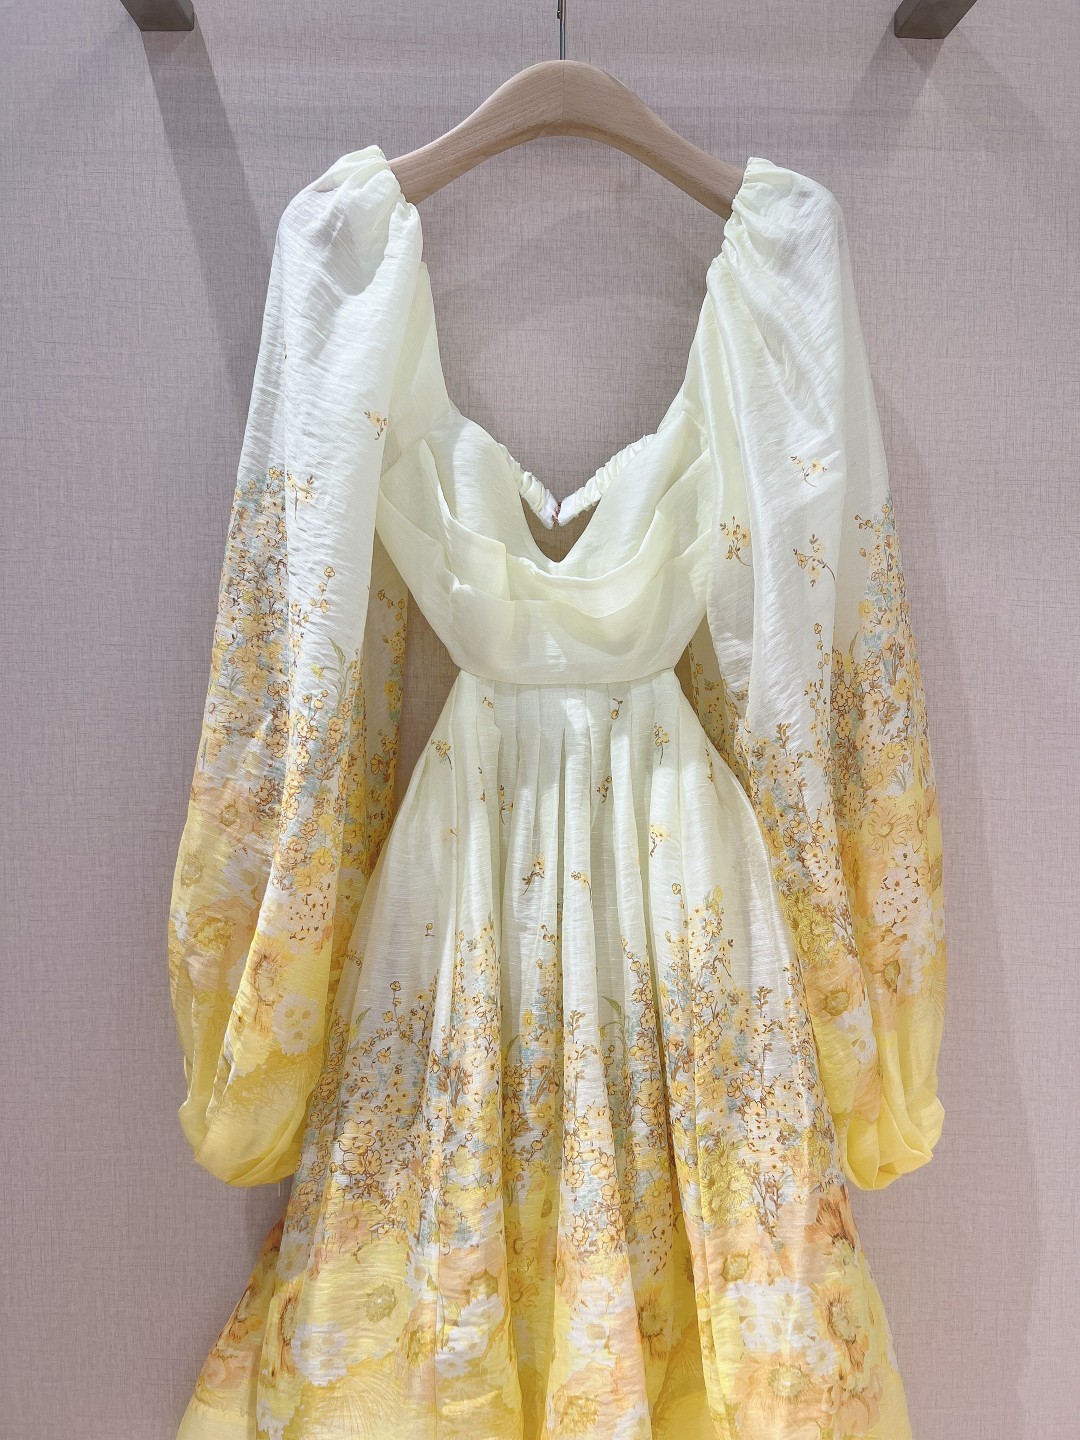 zimmerman*n春夏braletter花卉丝麻迷你裙采用浅色亚麻和丝绸混纺面料制成饰有生动的渐变花